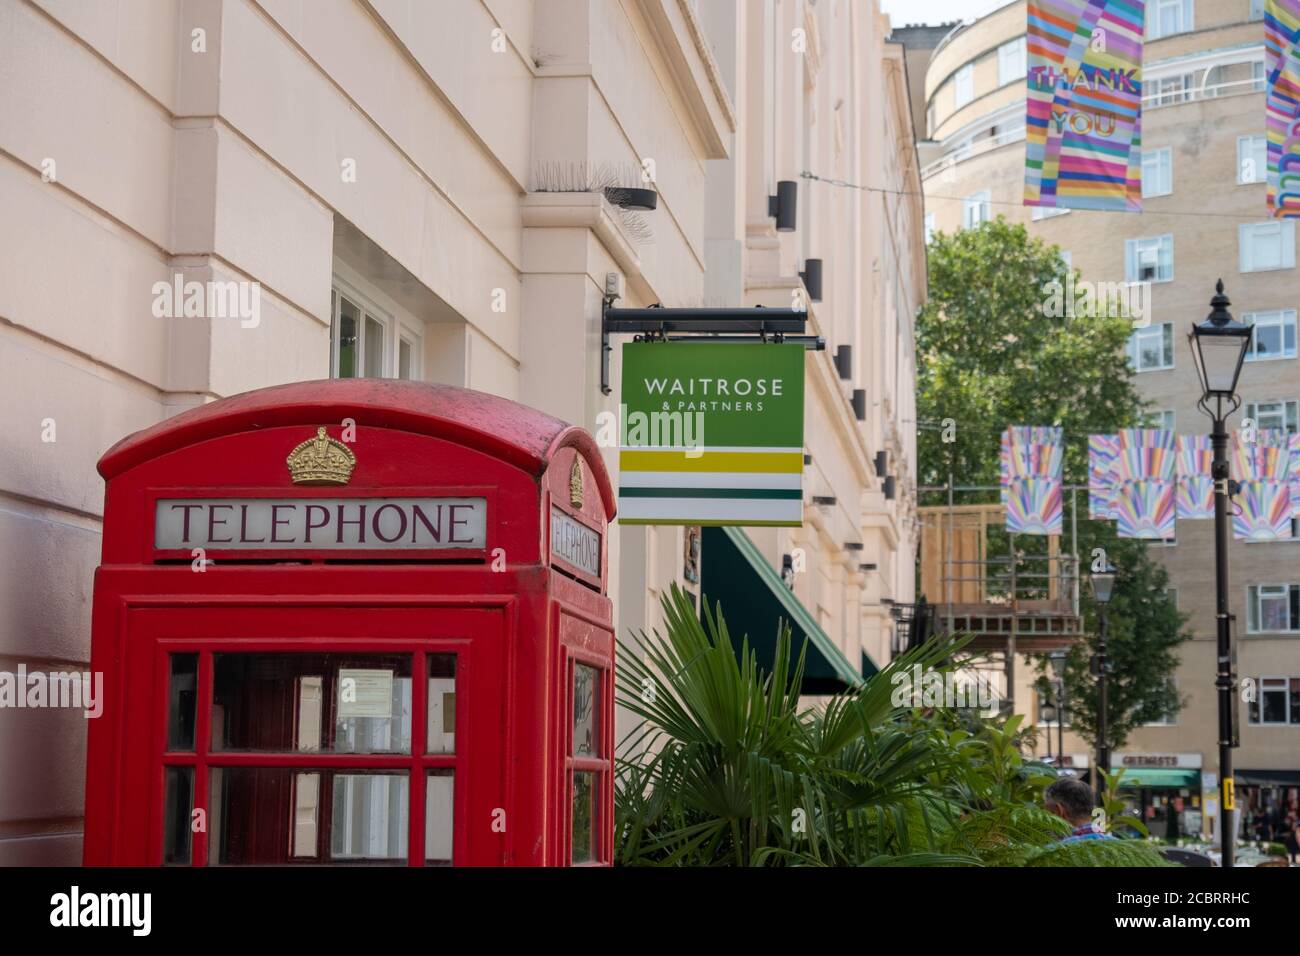 London - Waitrose Schild und rote Telefondose Stockfoto